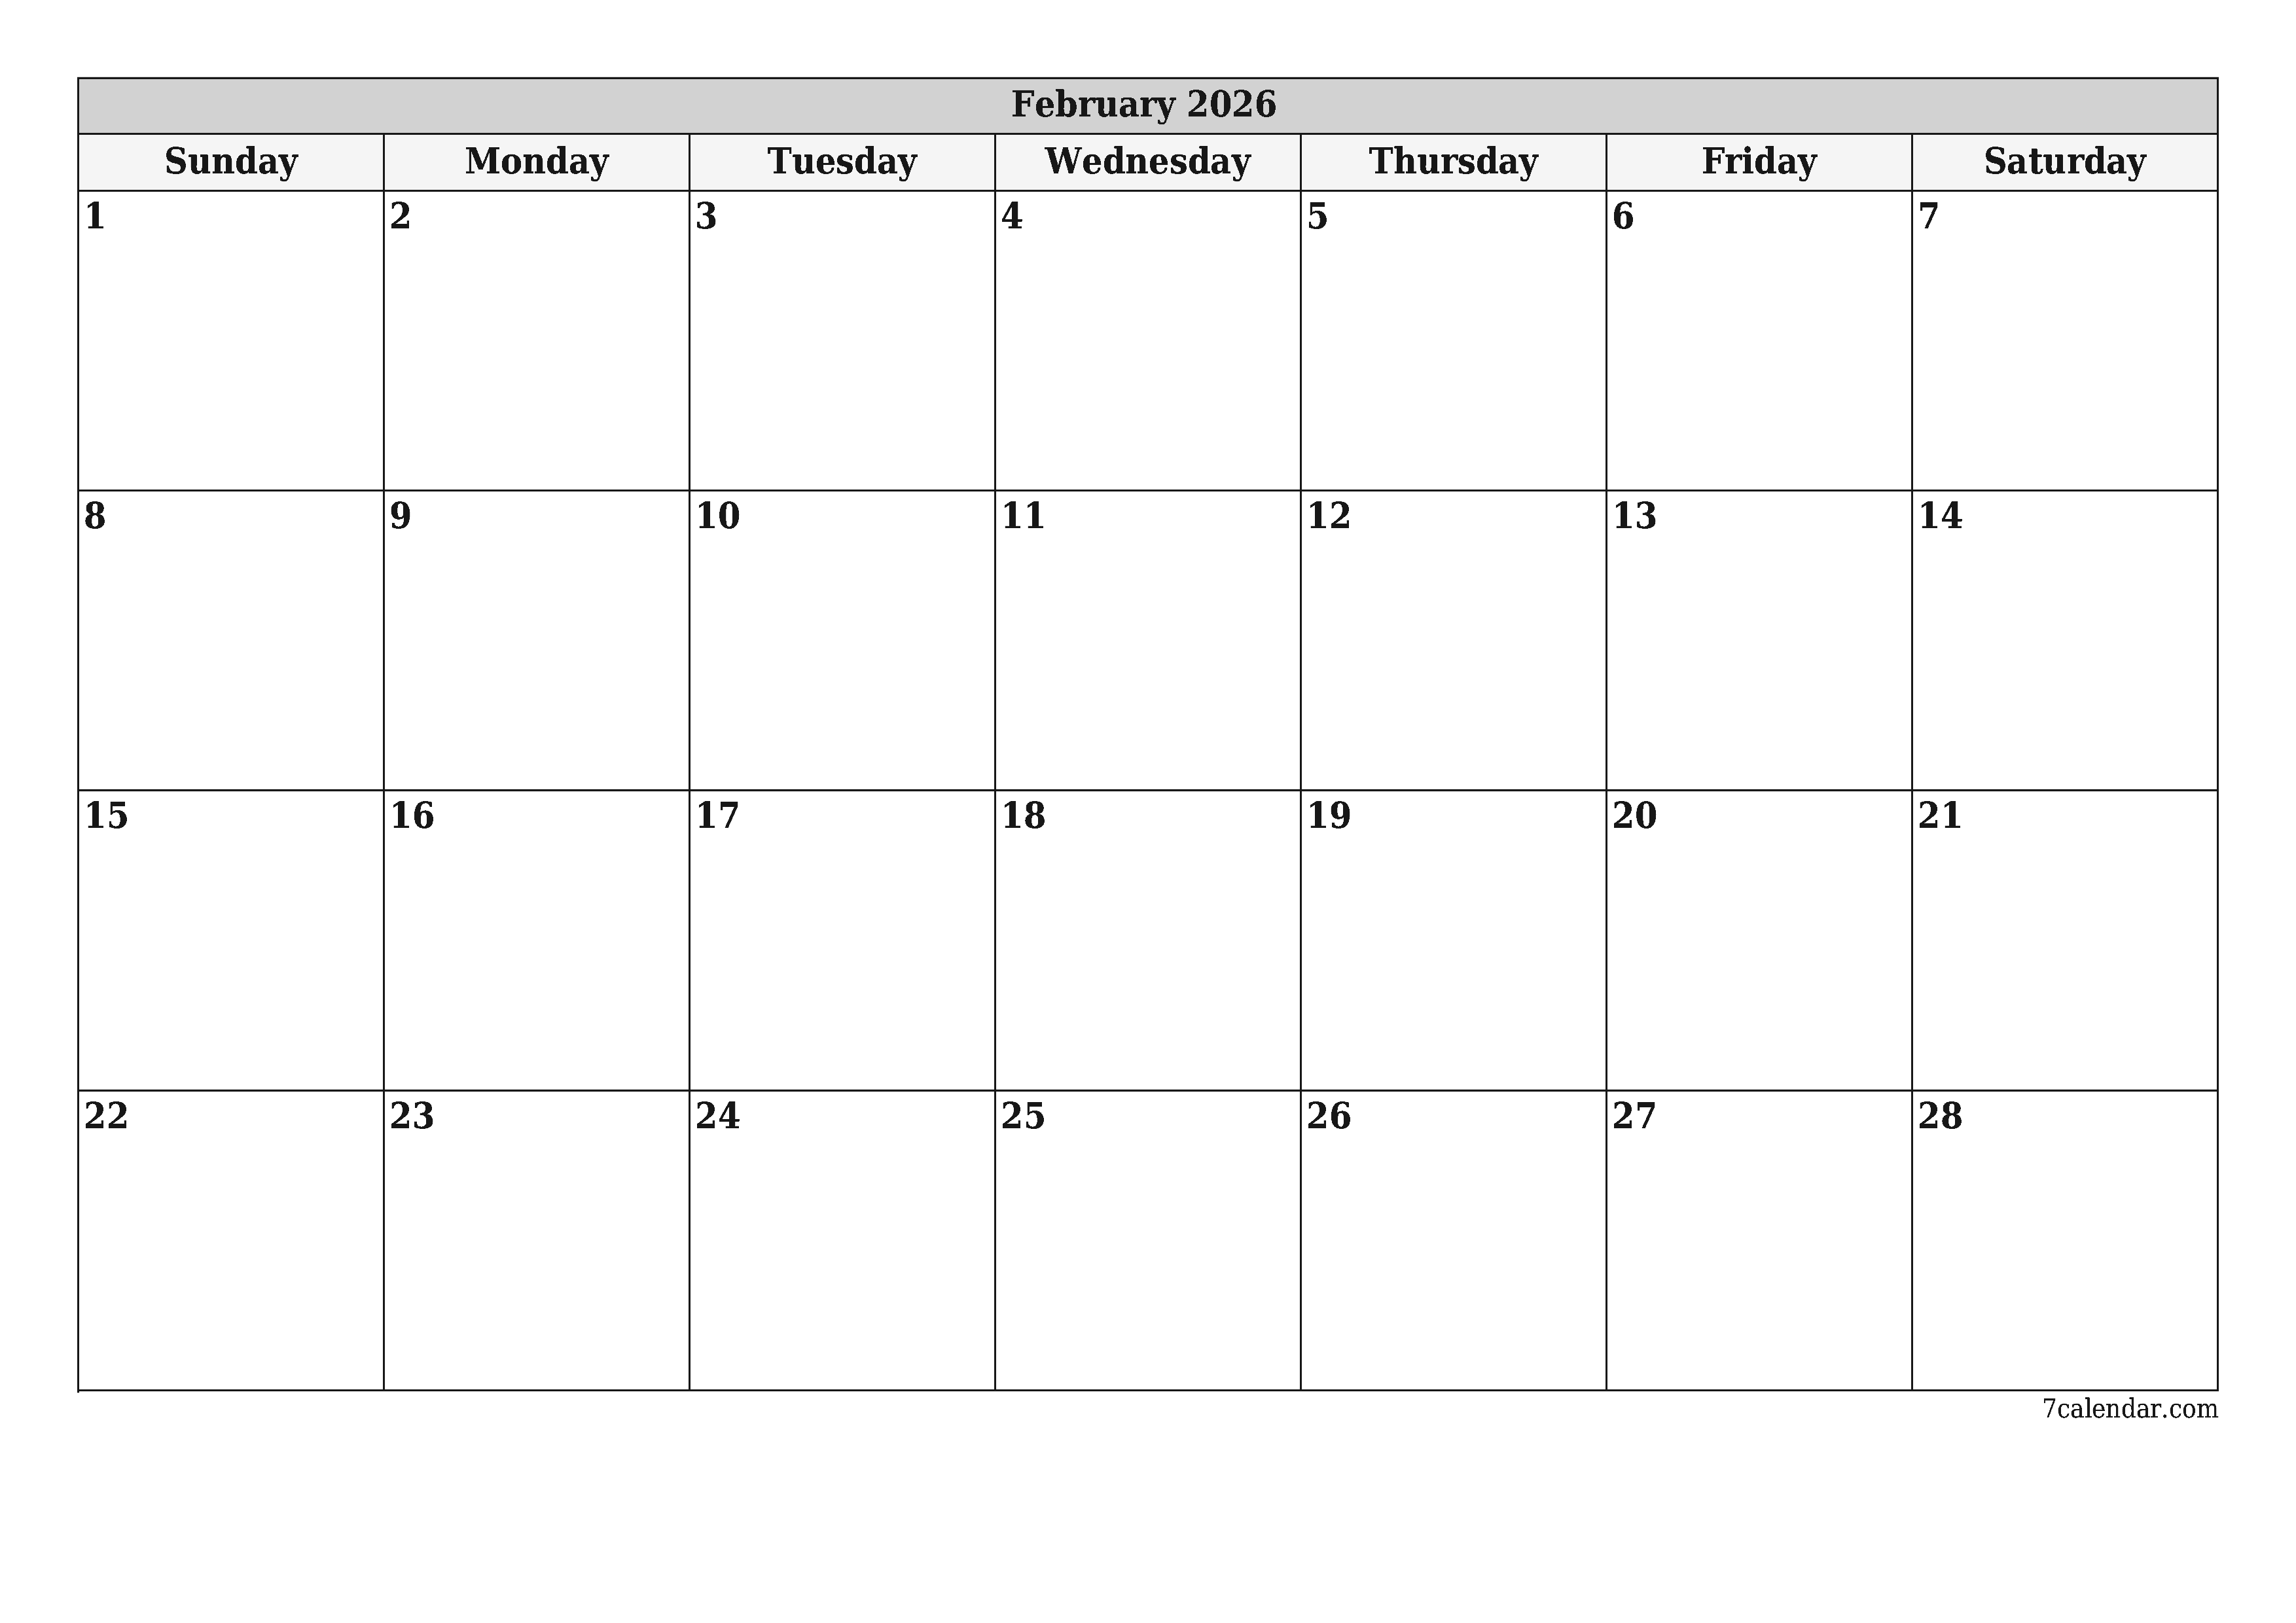 Blank calendar February 2026